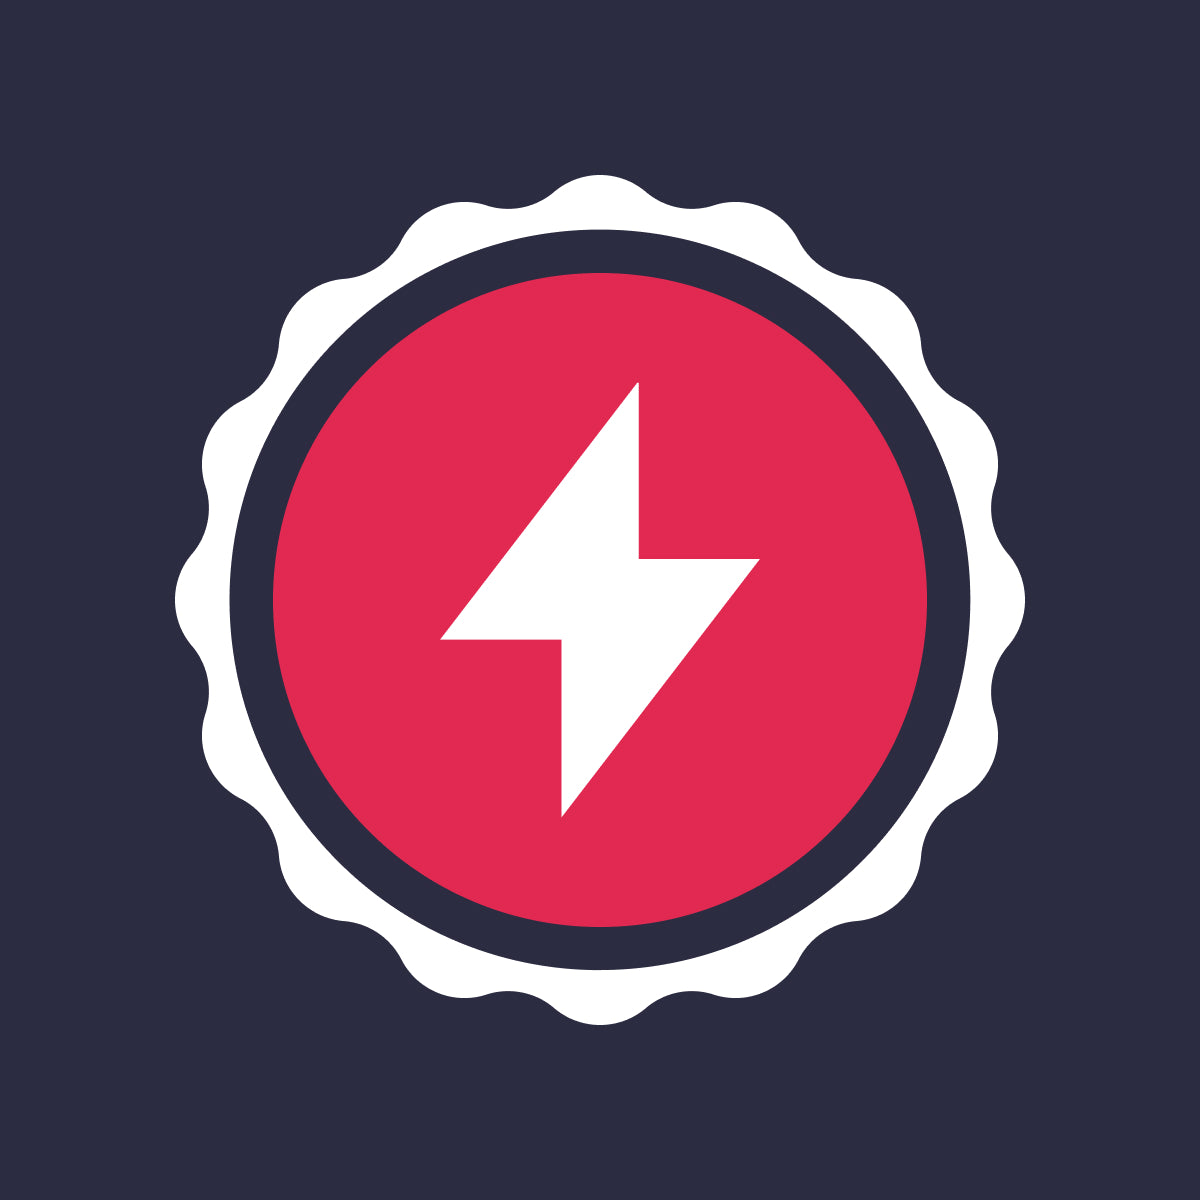 Invints Trust Badges & Icons - Invints Trust Badges & Icons Shopify app